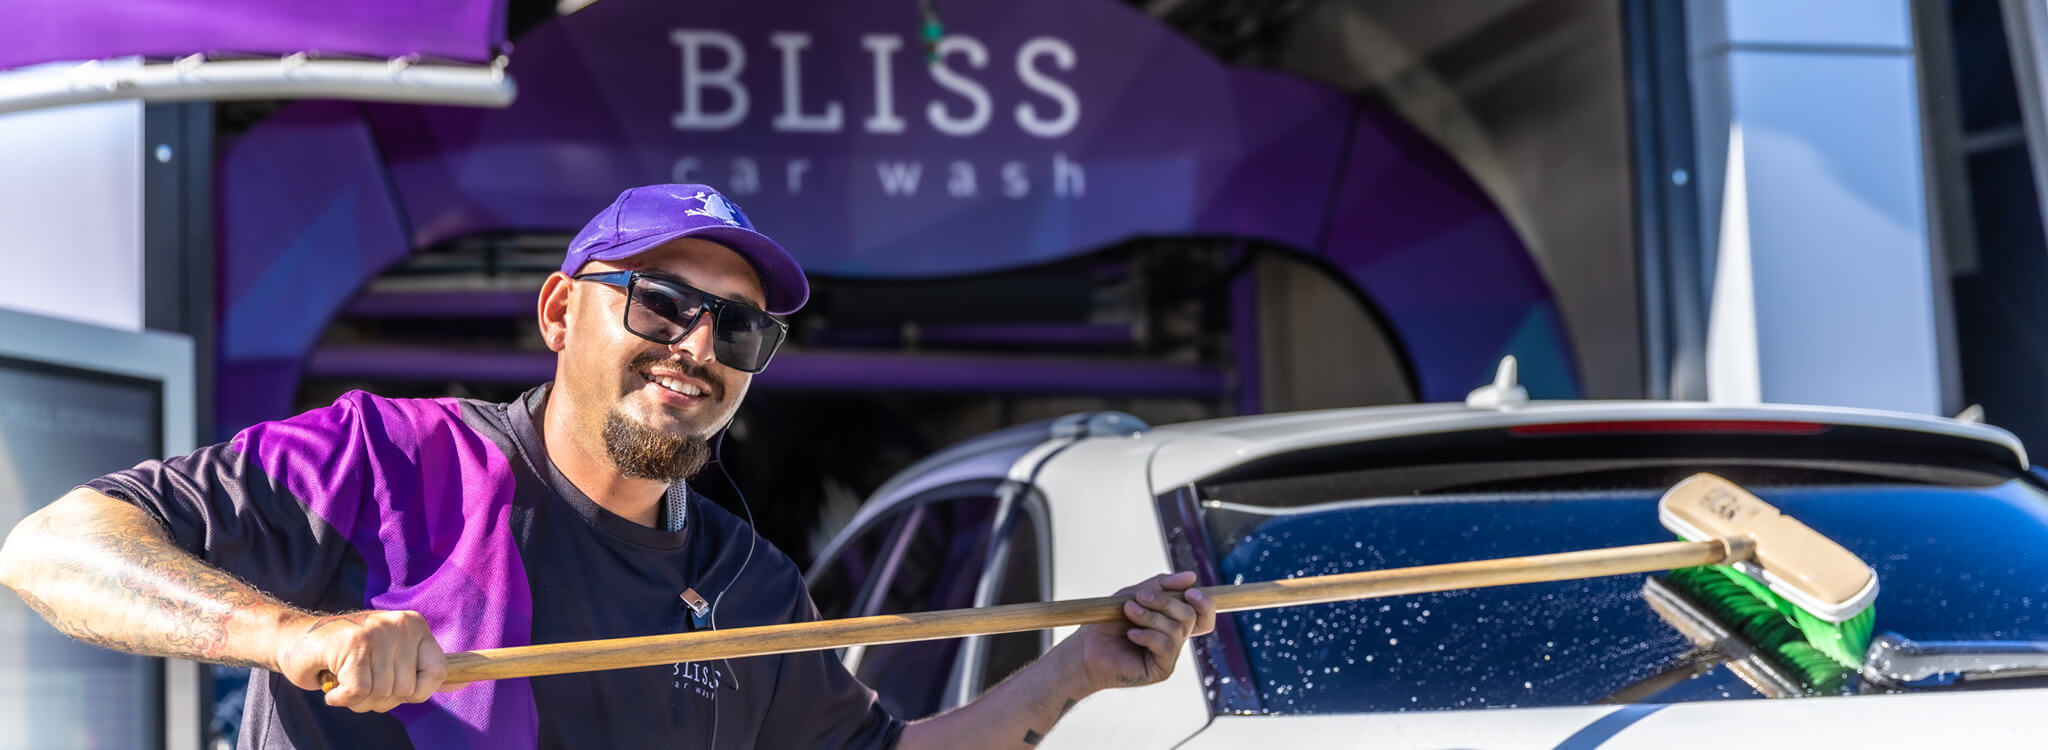 BLISS - Car Washing Service California